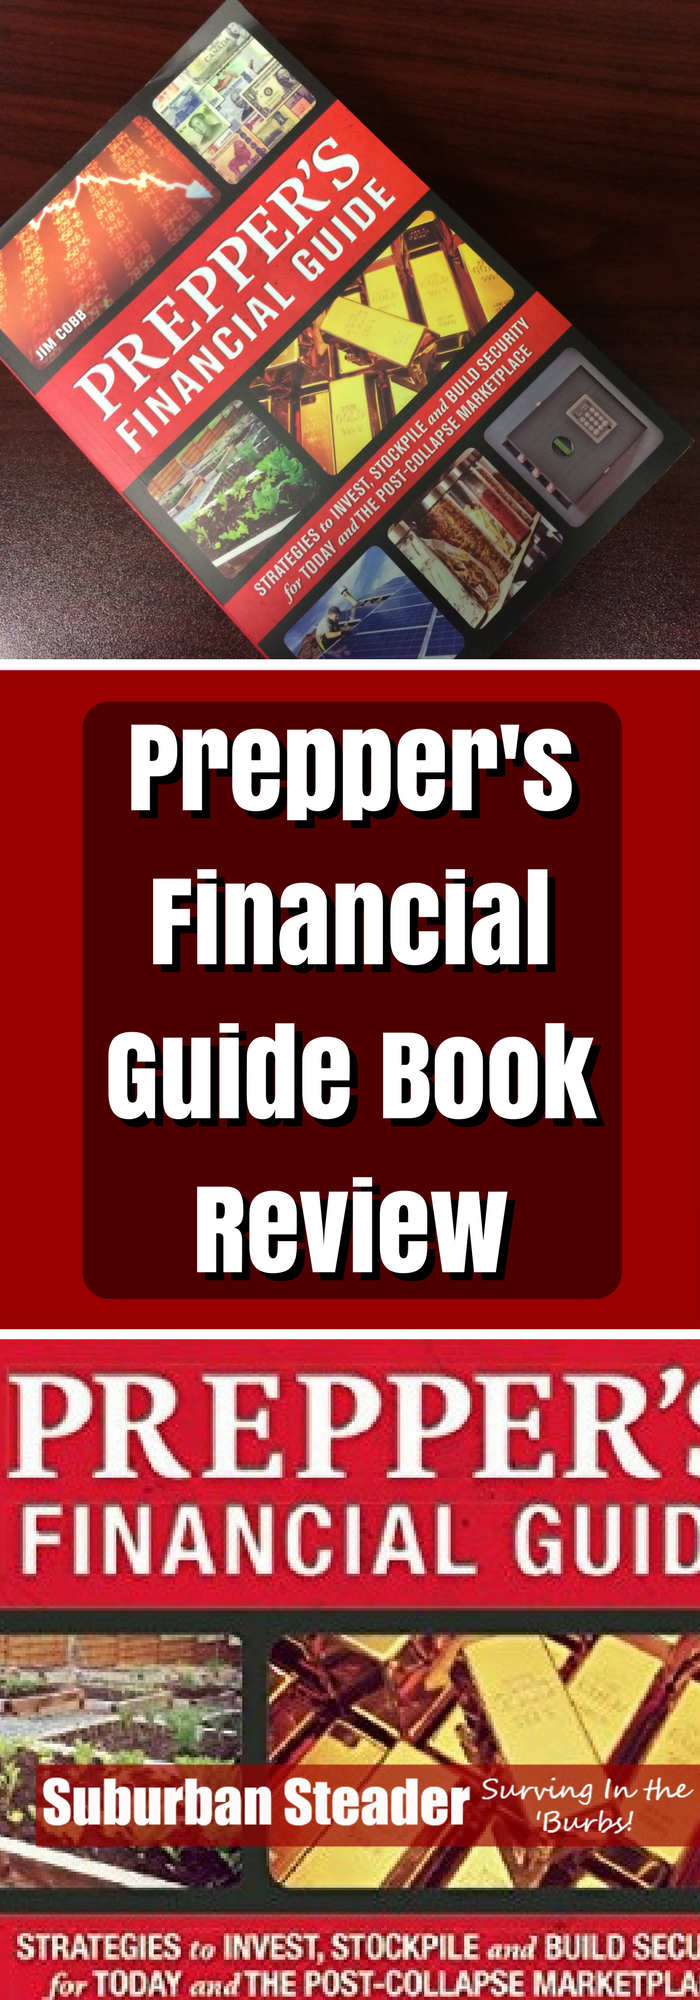 Prepper's Financial Guide by Jim Cobb